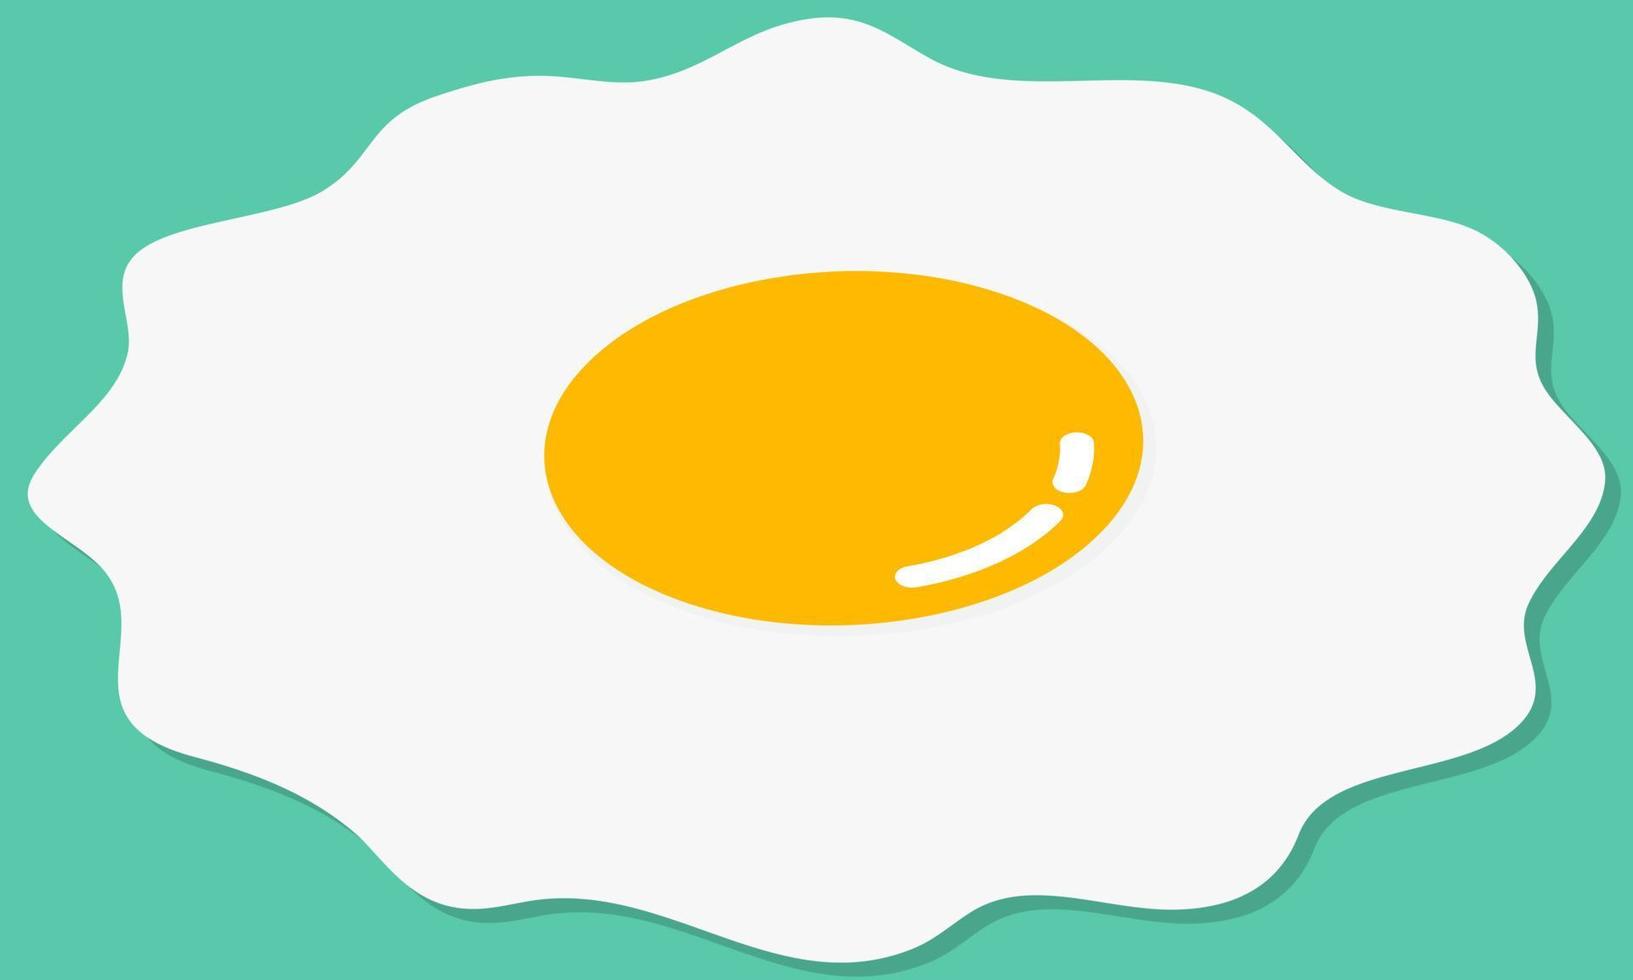 fried egg vector illustration on white background. creative icon.